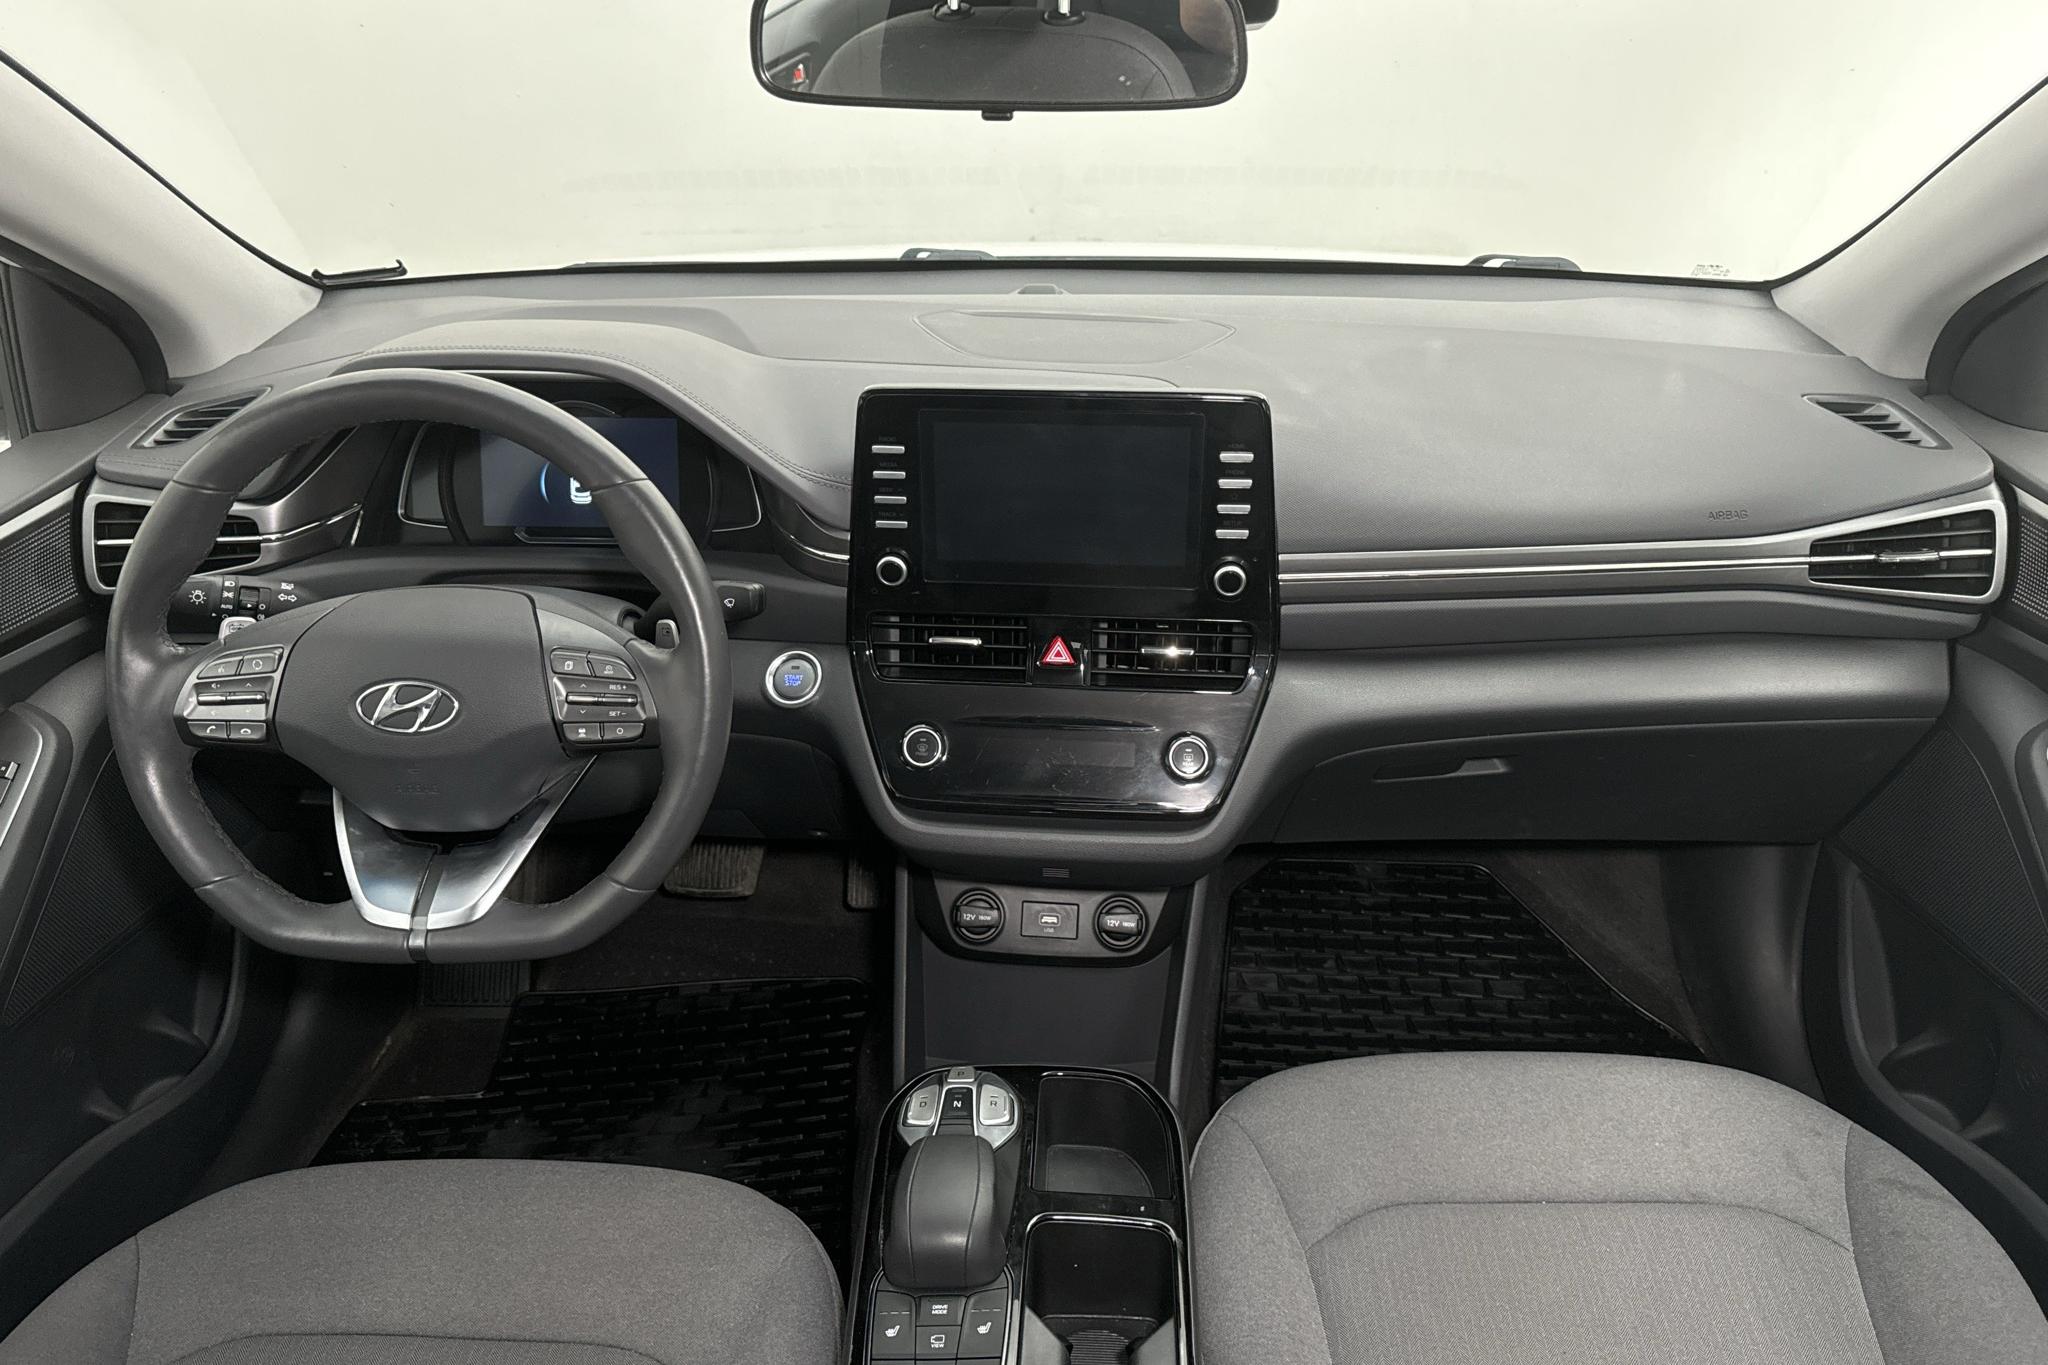 Hyundai IONIQ Electric (136hk) - 26 850 km - Automatic - white - 2020